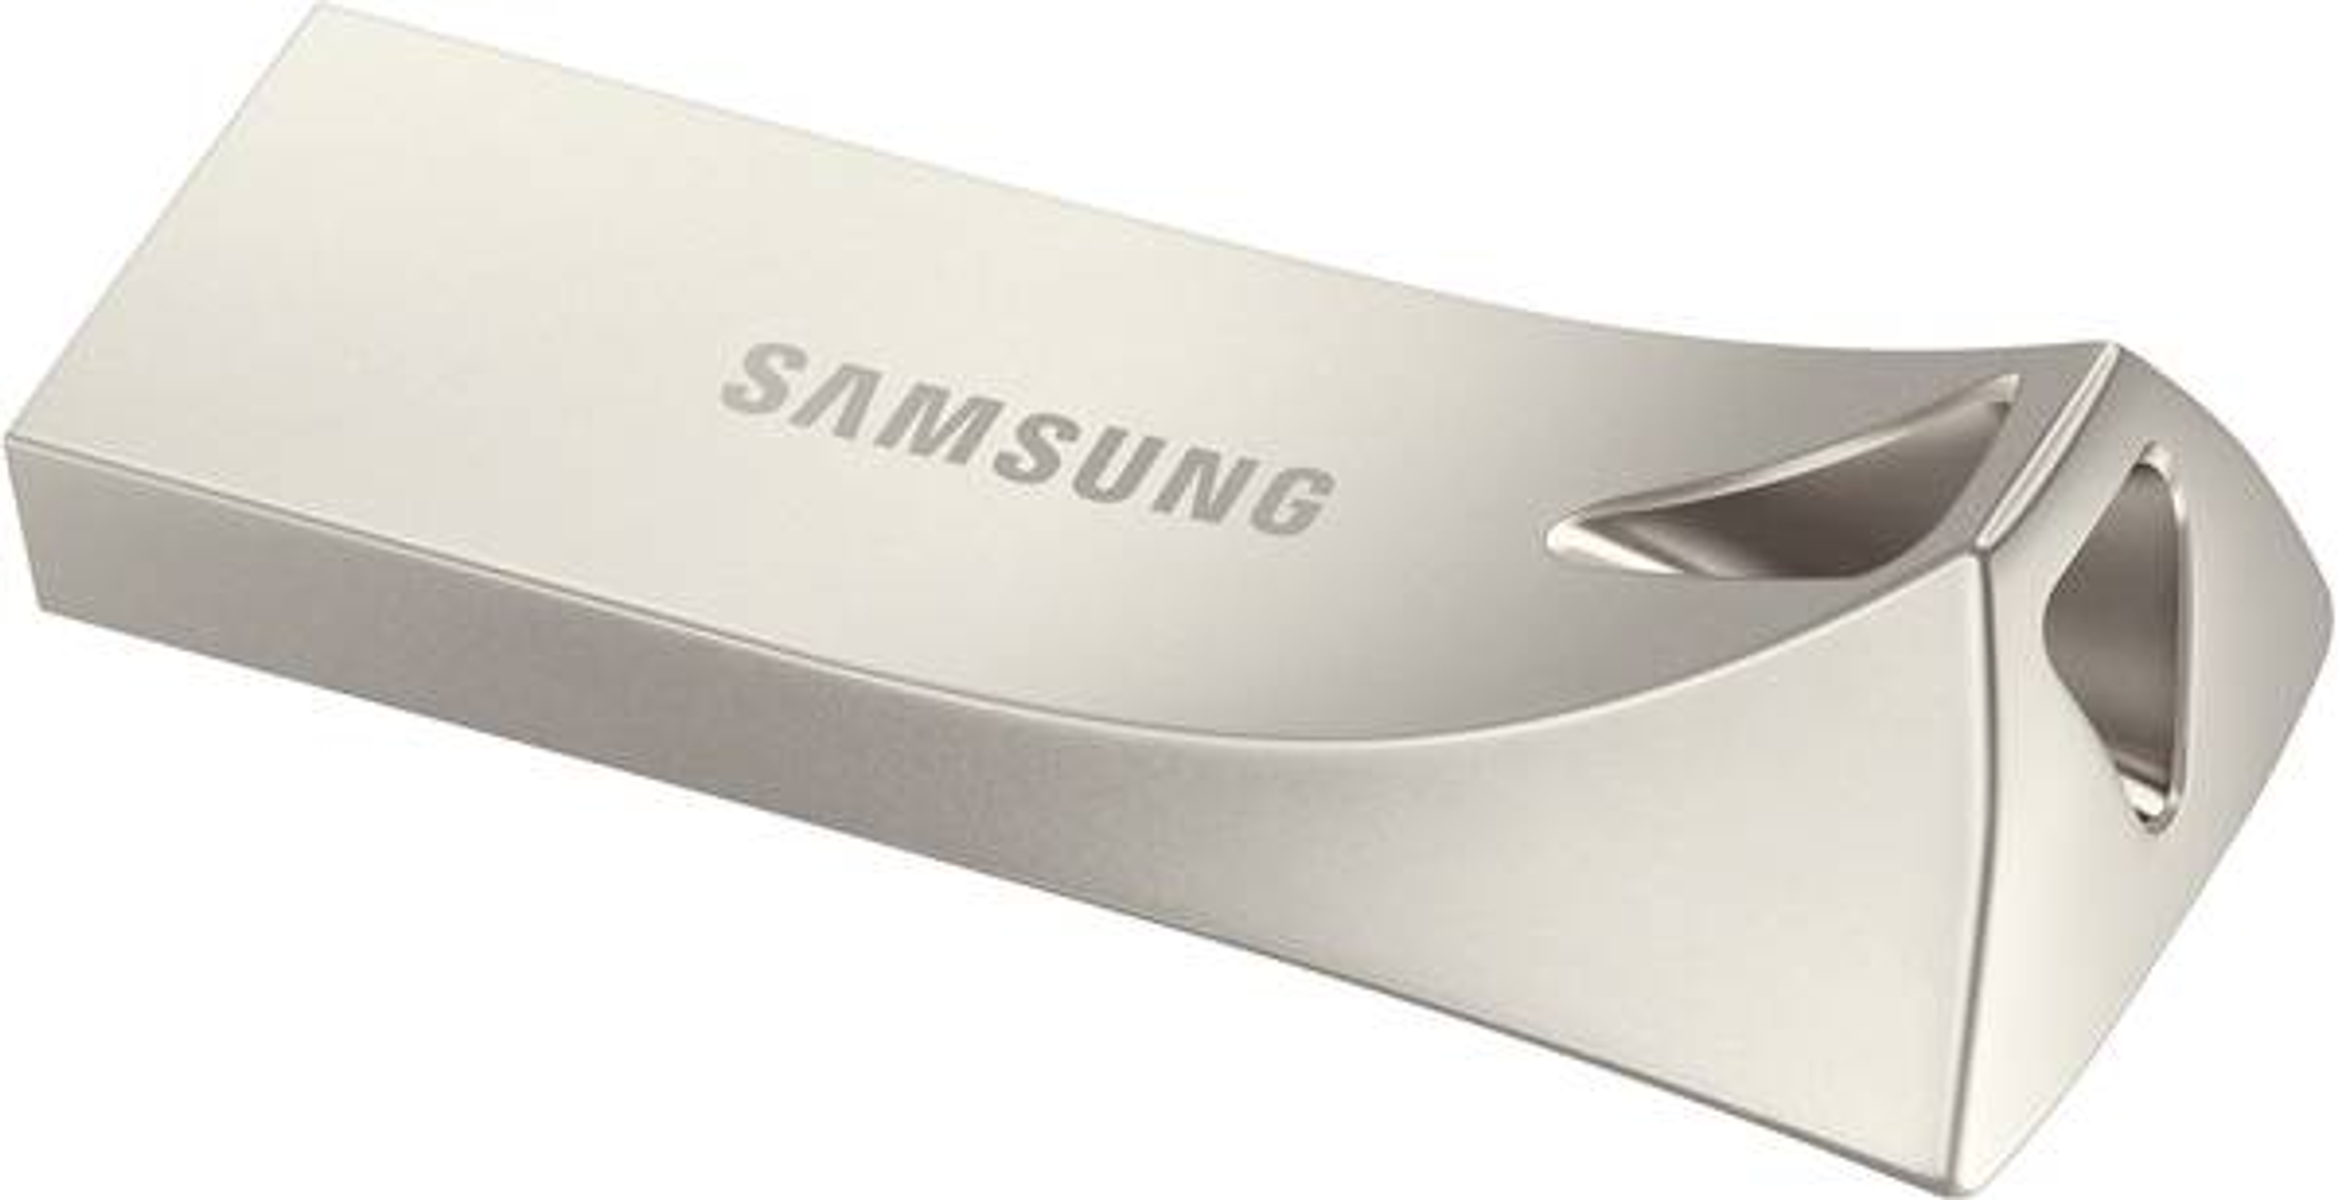 SAMSUNG CHAMPAGNE GB) 128 128GB MUF-128BE3/APC SILVER BAR USB-Stick (Champagner, PLUS